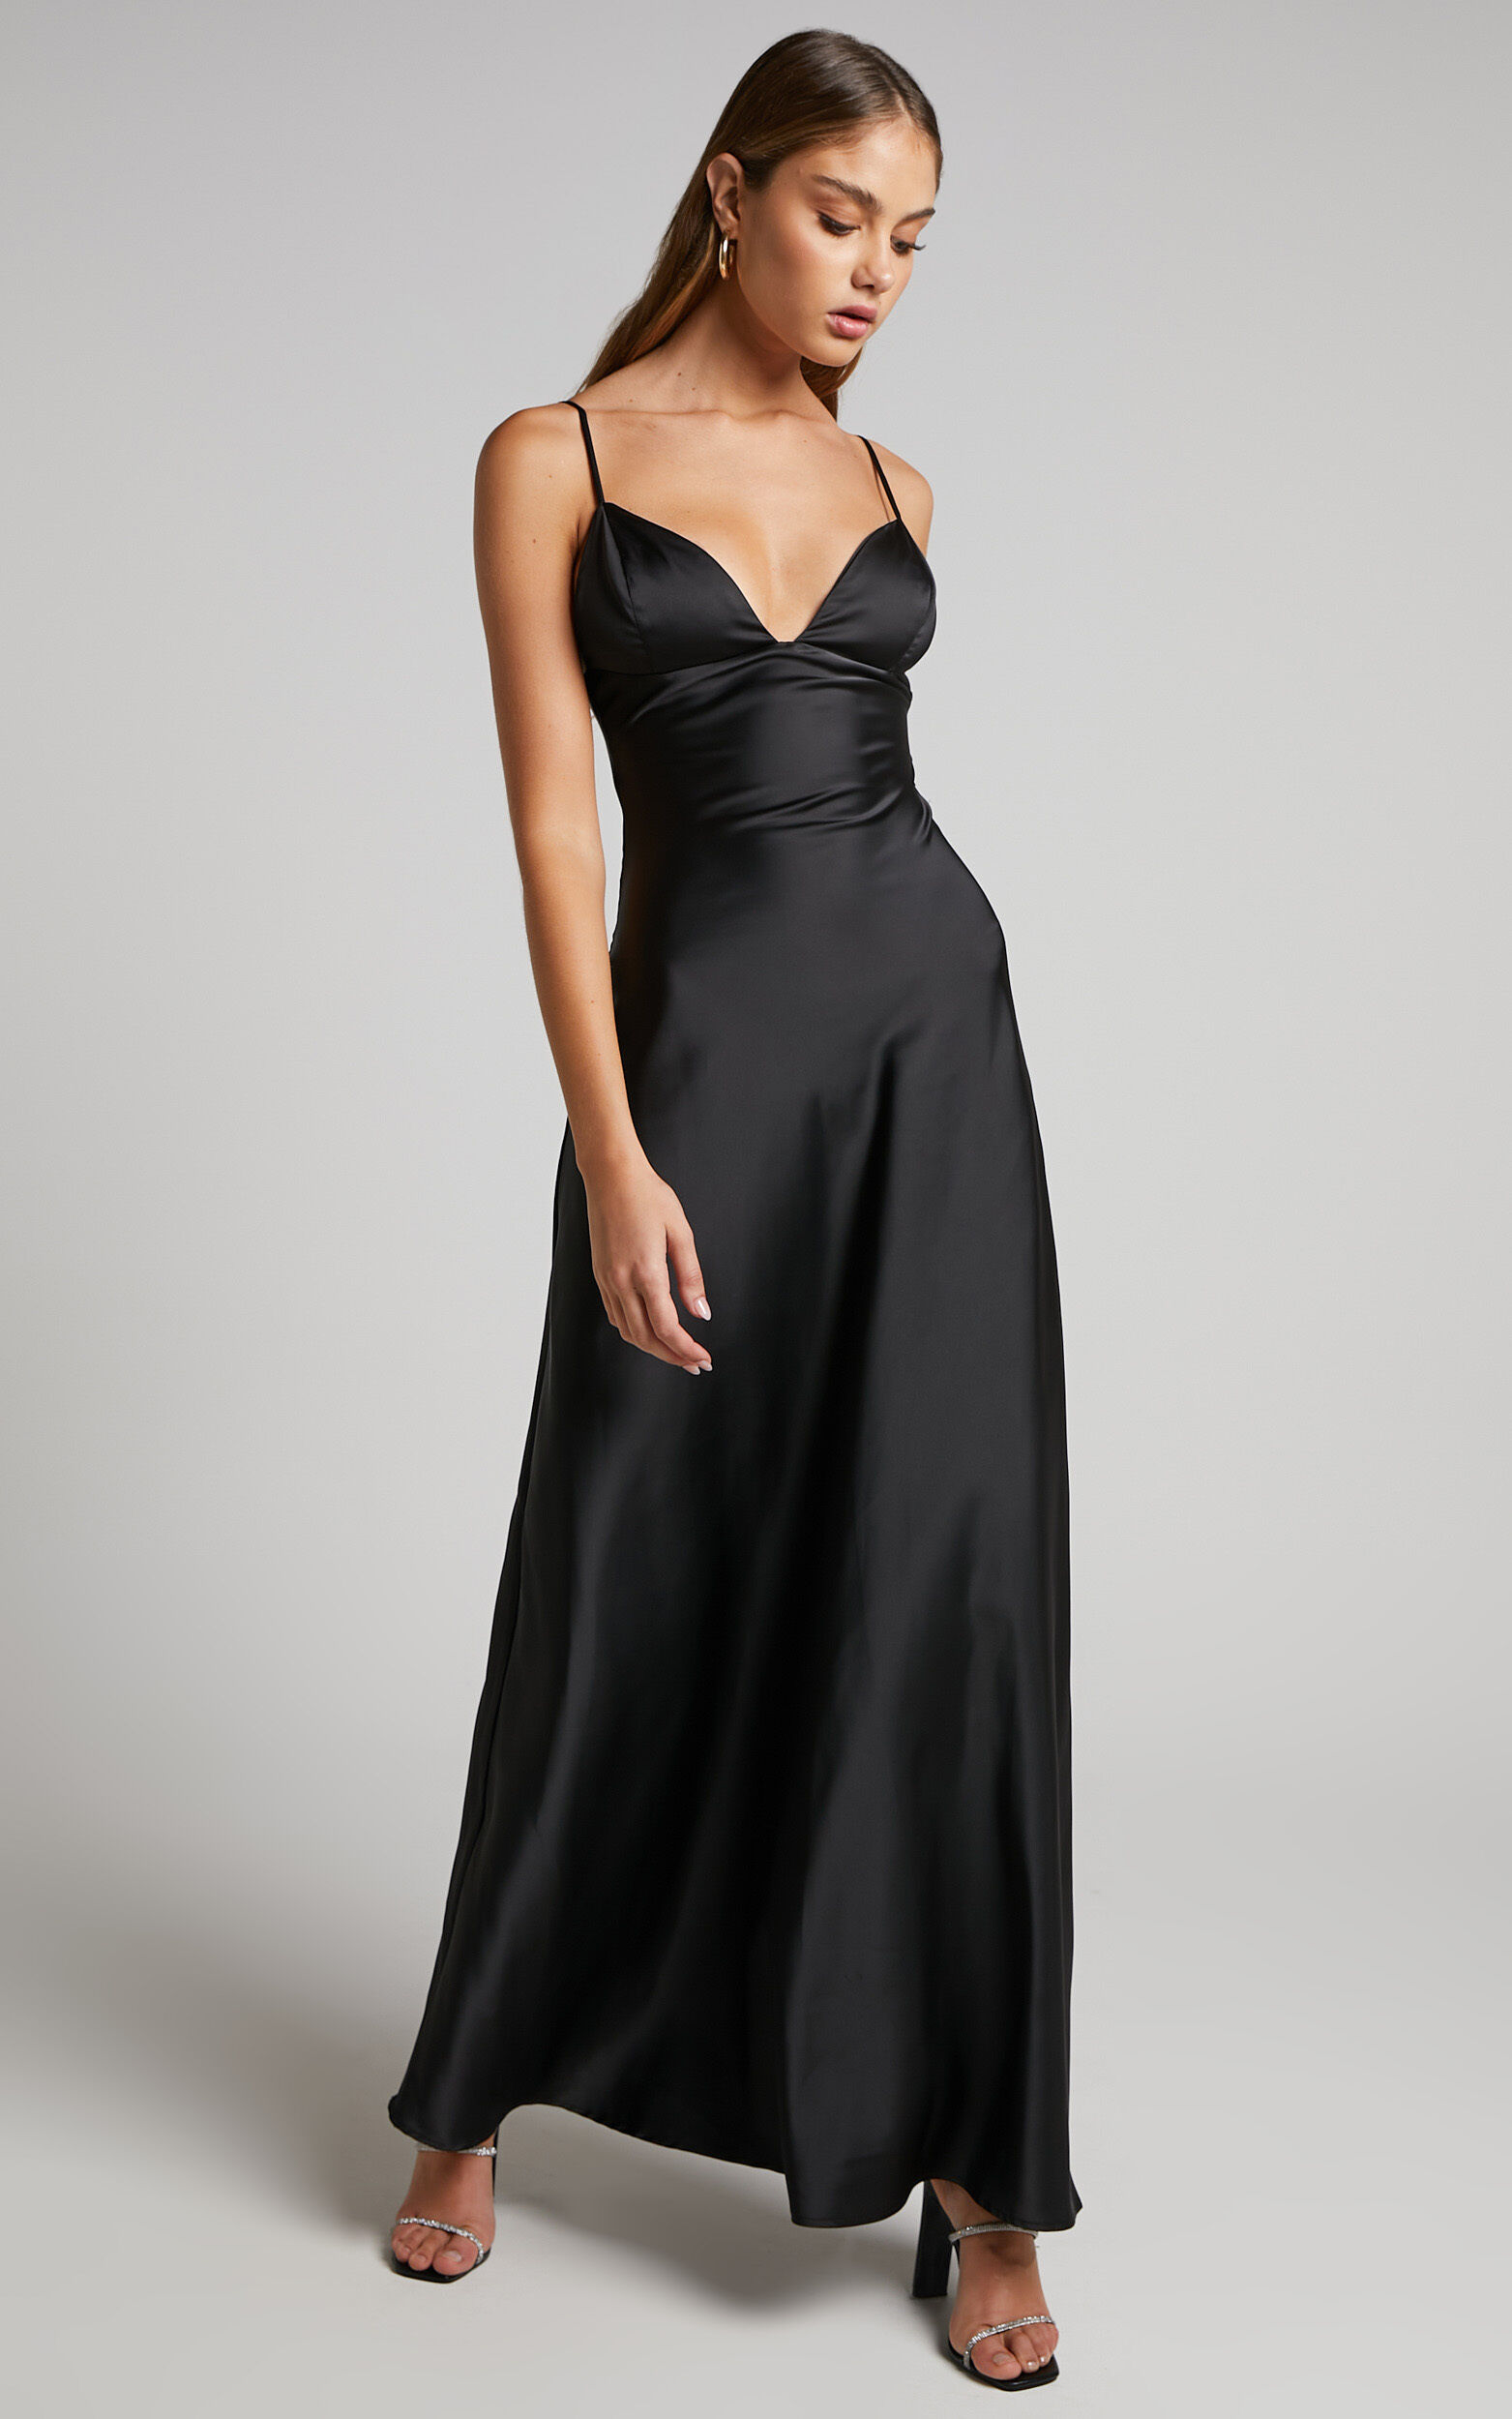 Cariela Midi Dress - Plunge Neck Satin Dress in Black - 04, BLK1